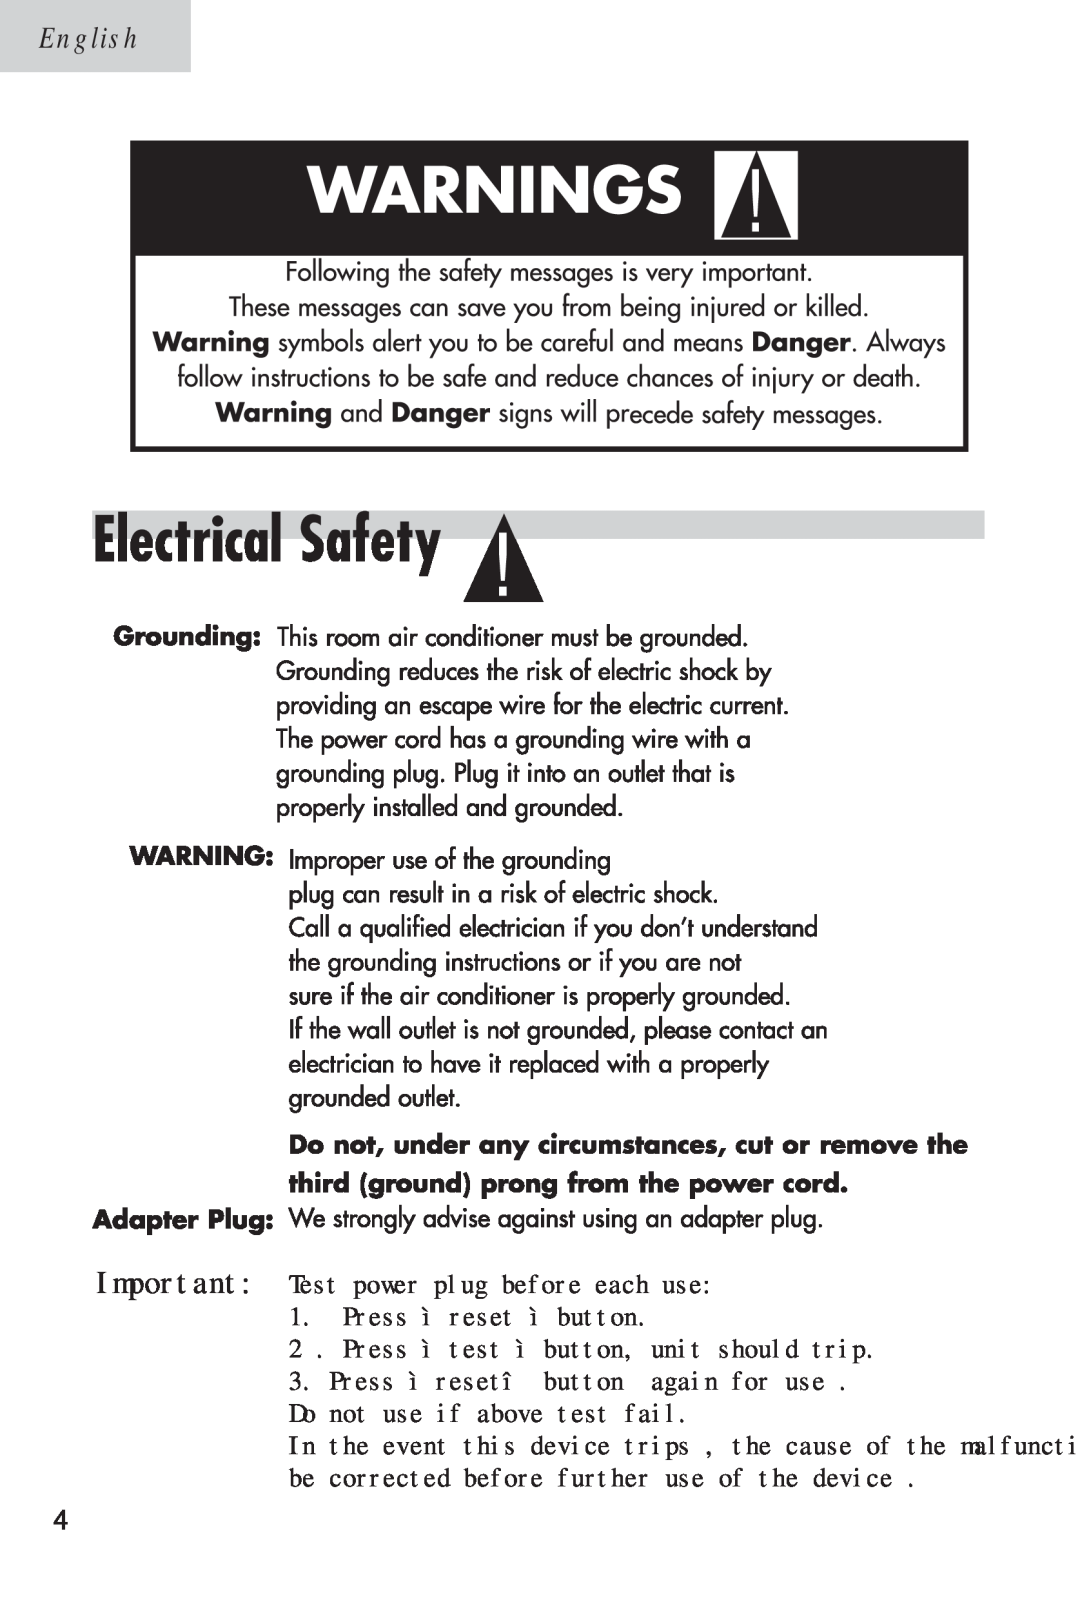 Haier ESA3105 manual English, Important Test power plug before each use, Press ìreset ìbutton 